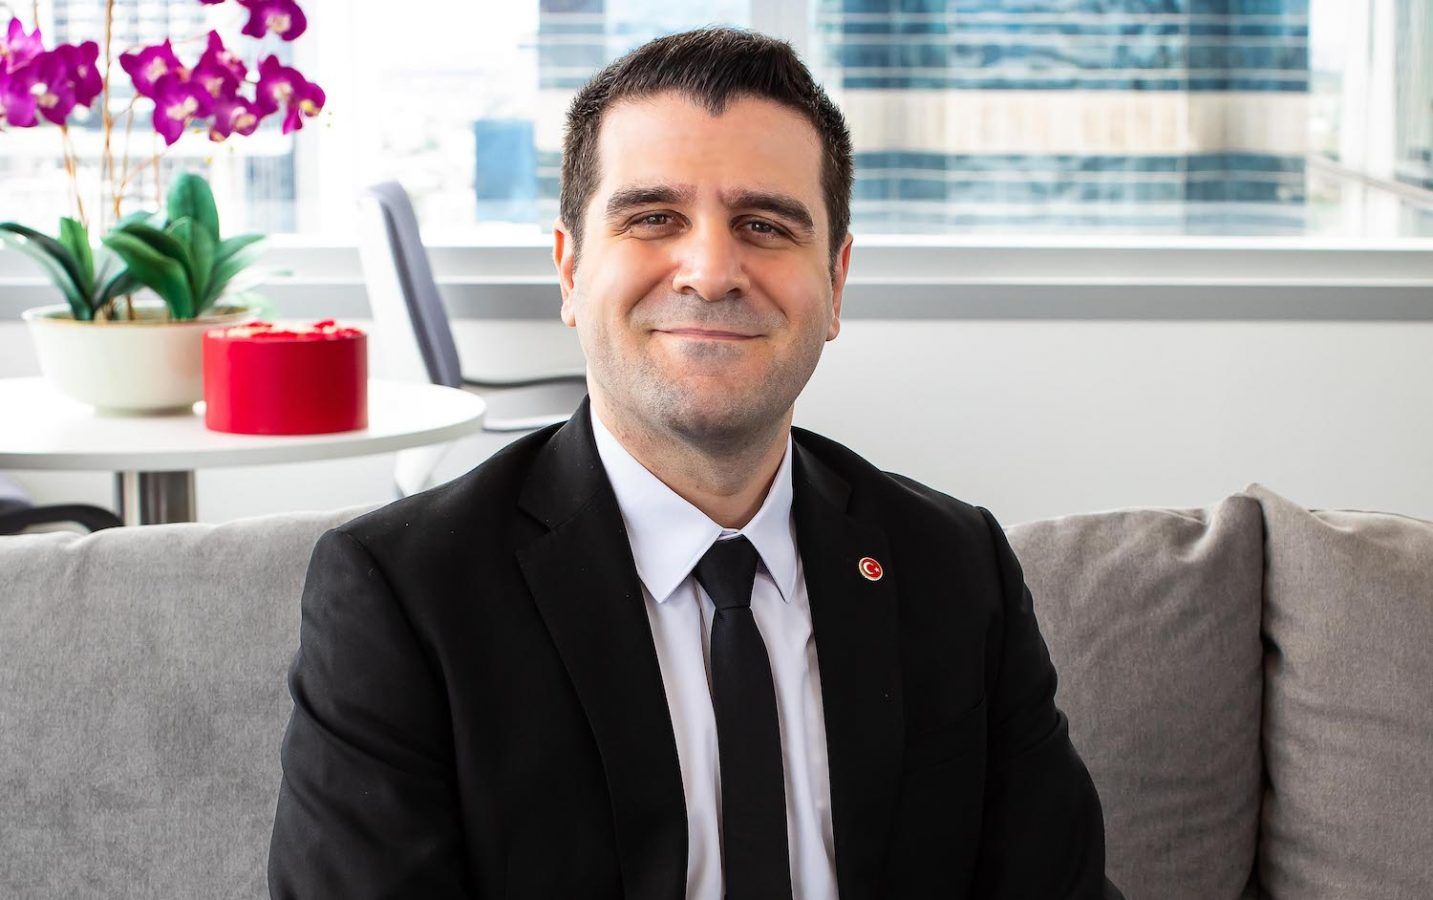 Director of Turkish Airlines, Ahmet Tugcu, on Achieving Customer Satisfaction